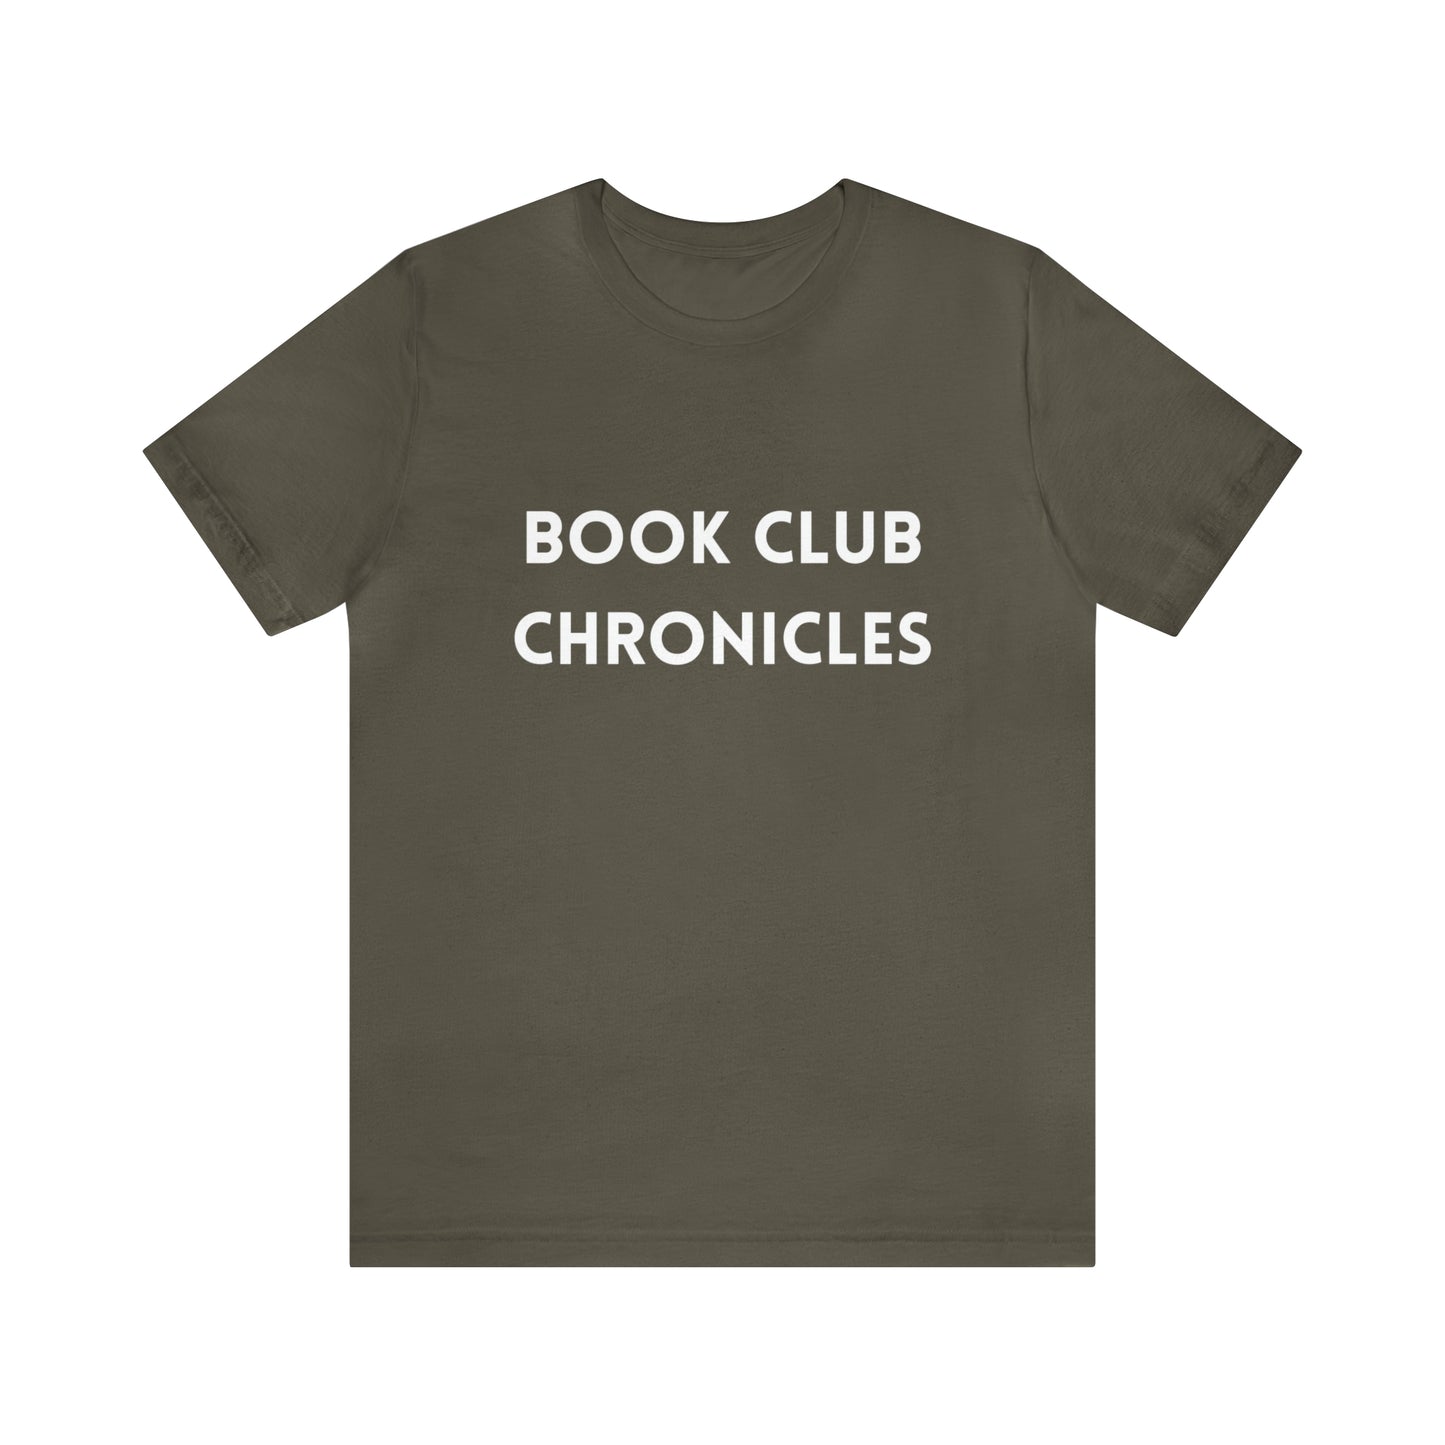 Bookworm Chic: 'Book Club Chronicles' T-Shirt for Avid Readers T-Shirt Petrova Designs